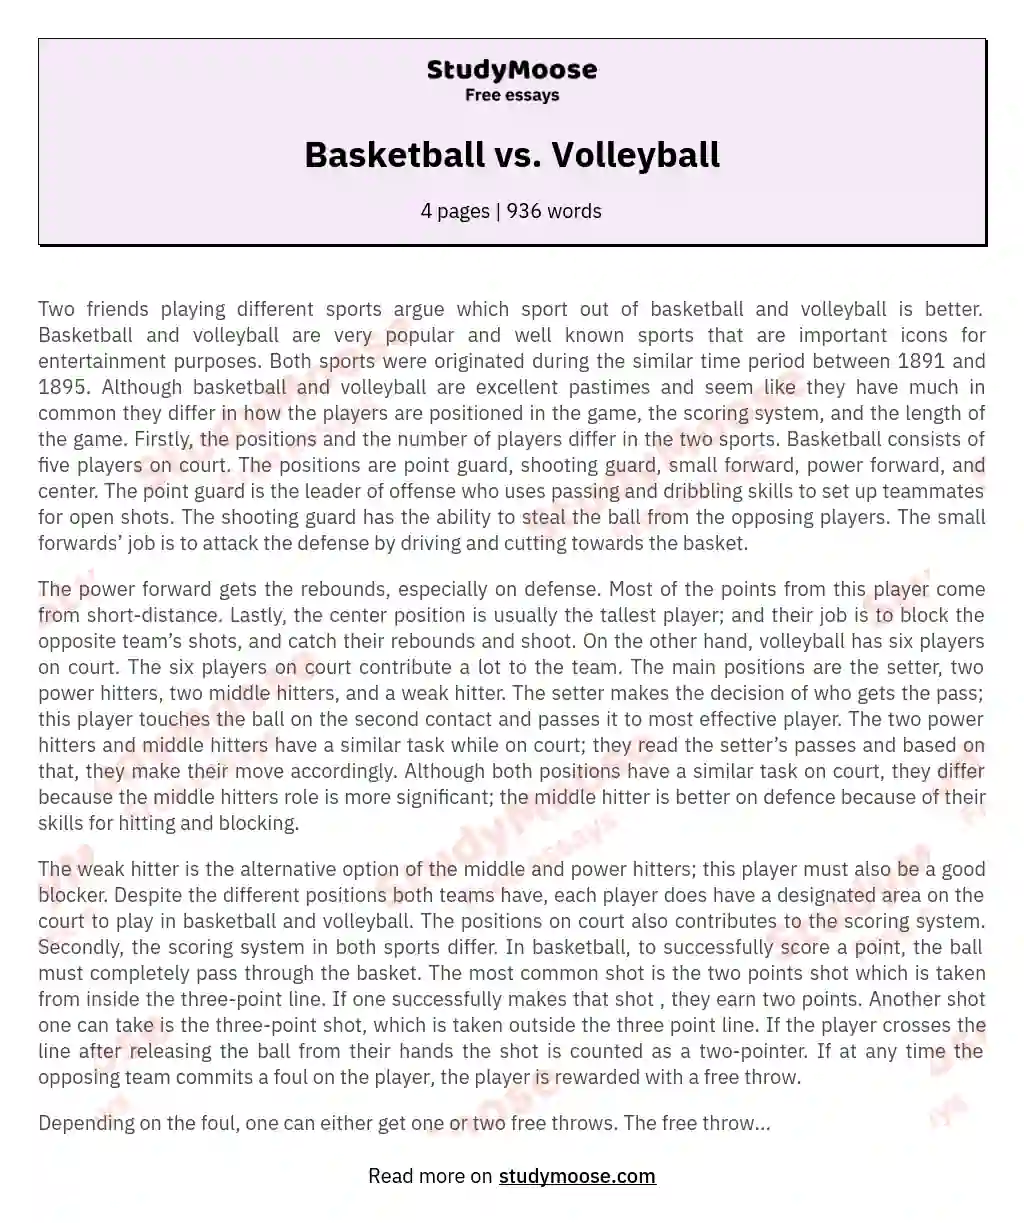 Basketball vs. Volleyball essay